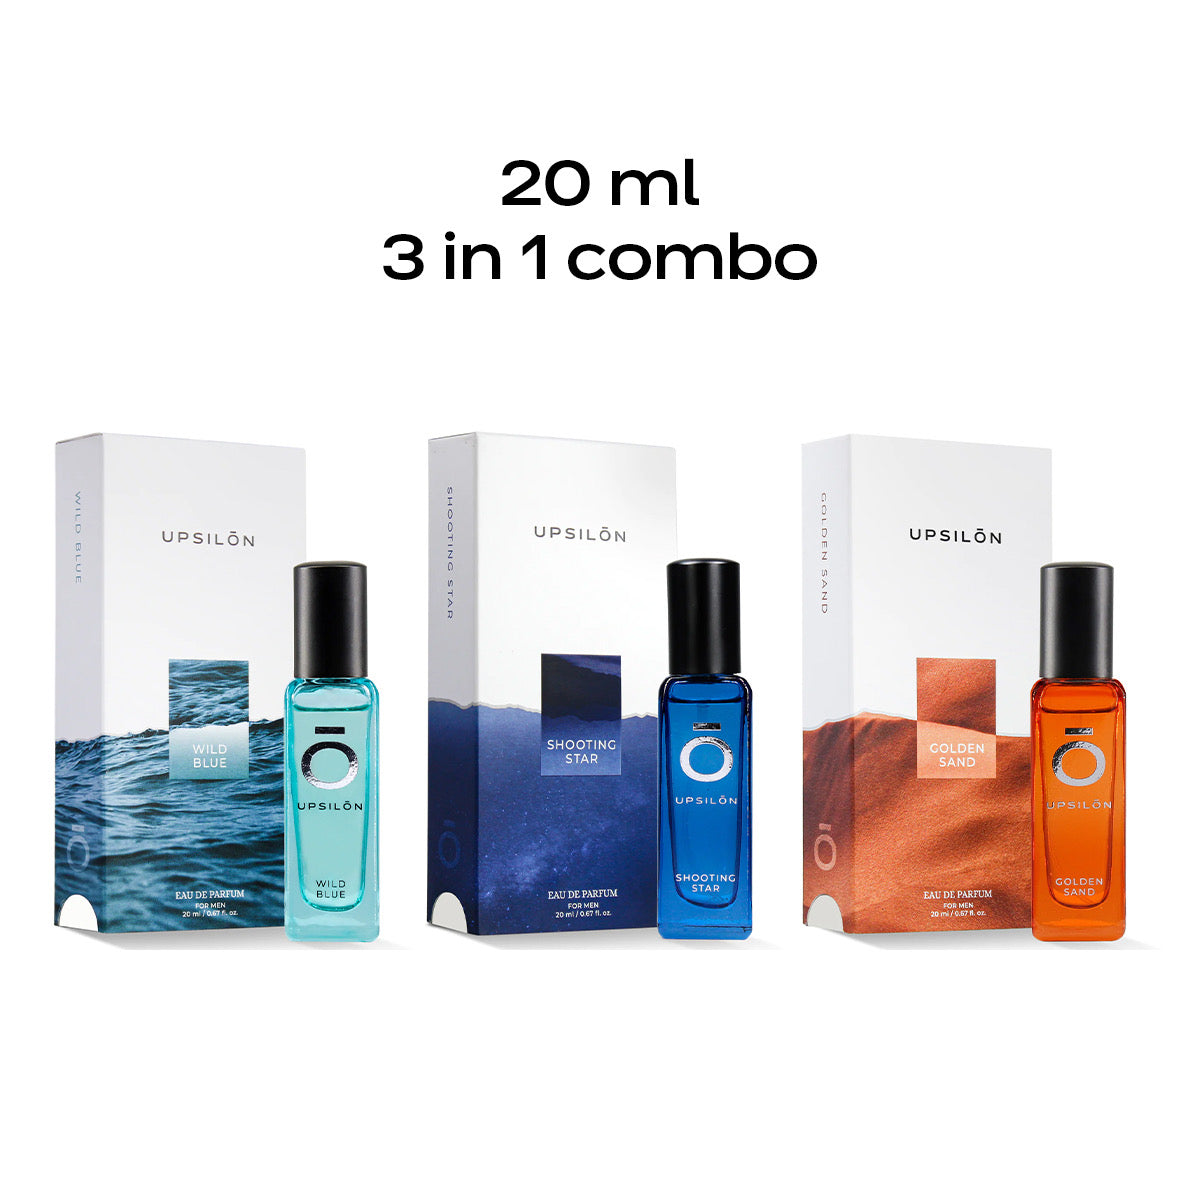 Upsilon Luxury Perfume (20ML) 3-in-1 Combo For Men